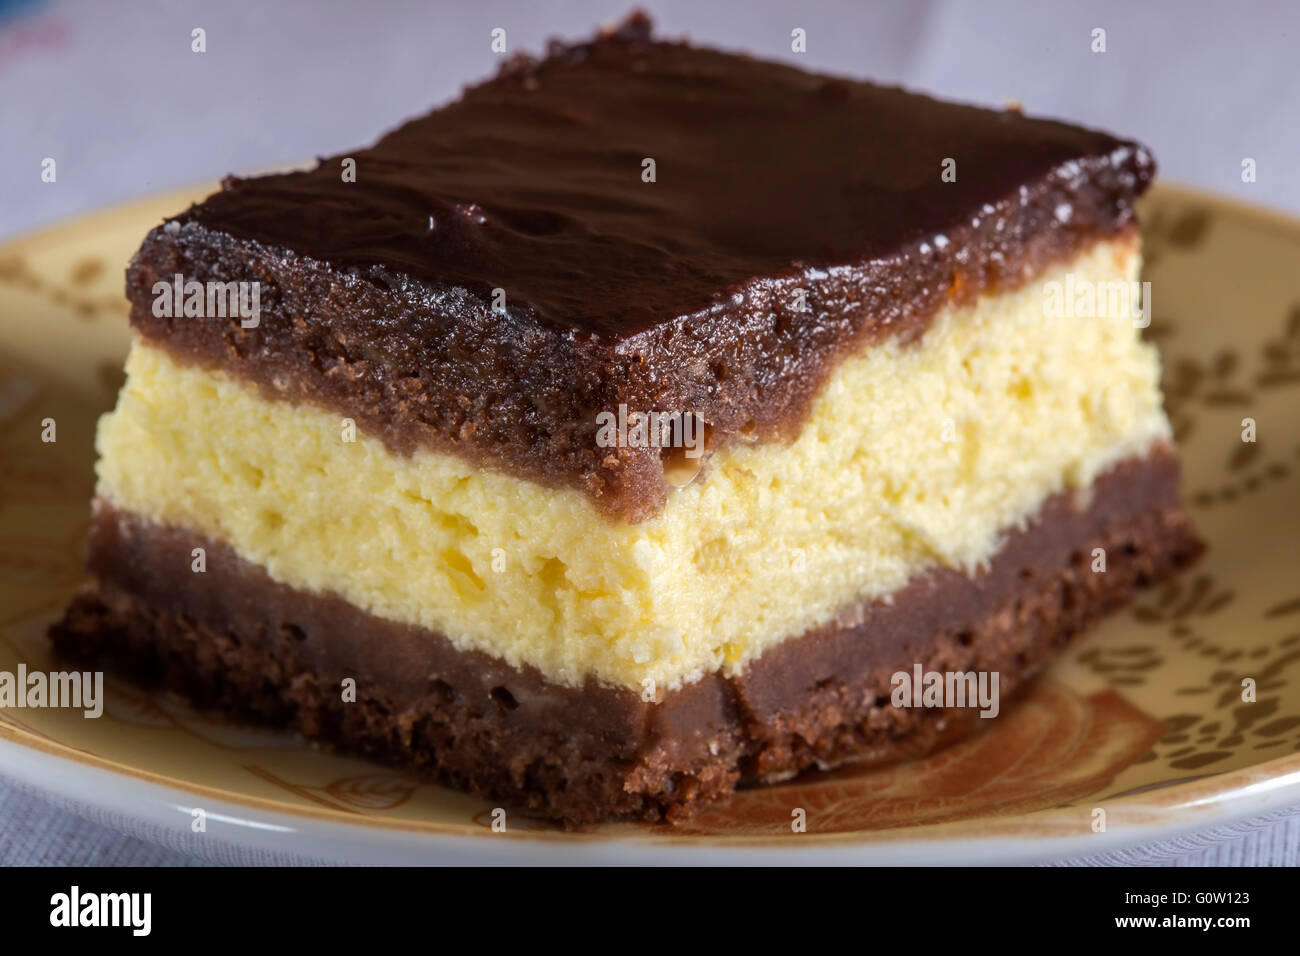 Piece of chocolate cheesecake brownie on plate Stock Photo